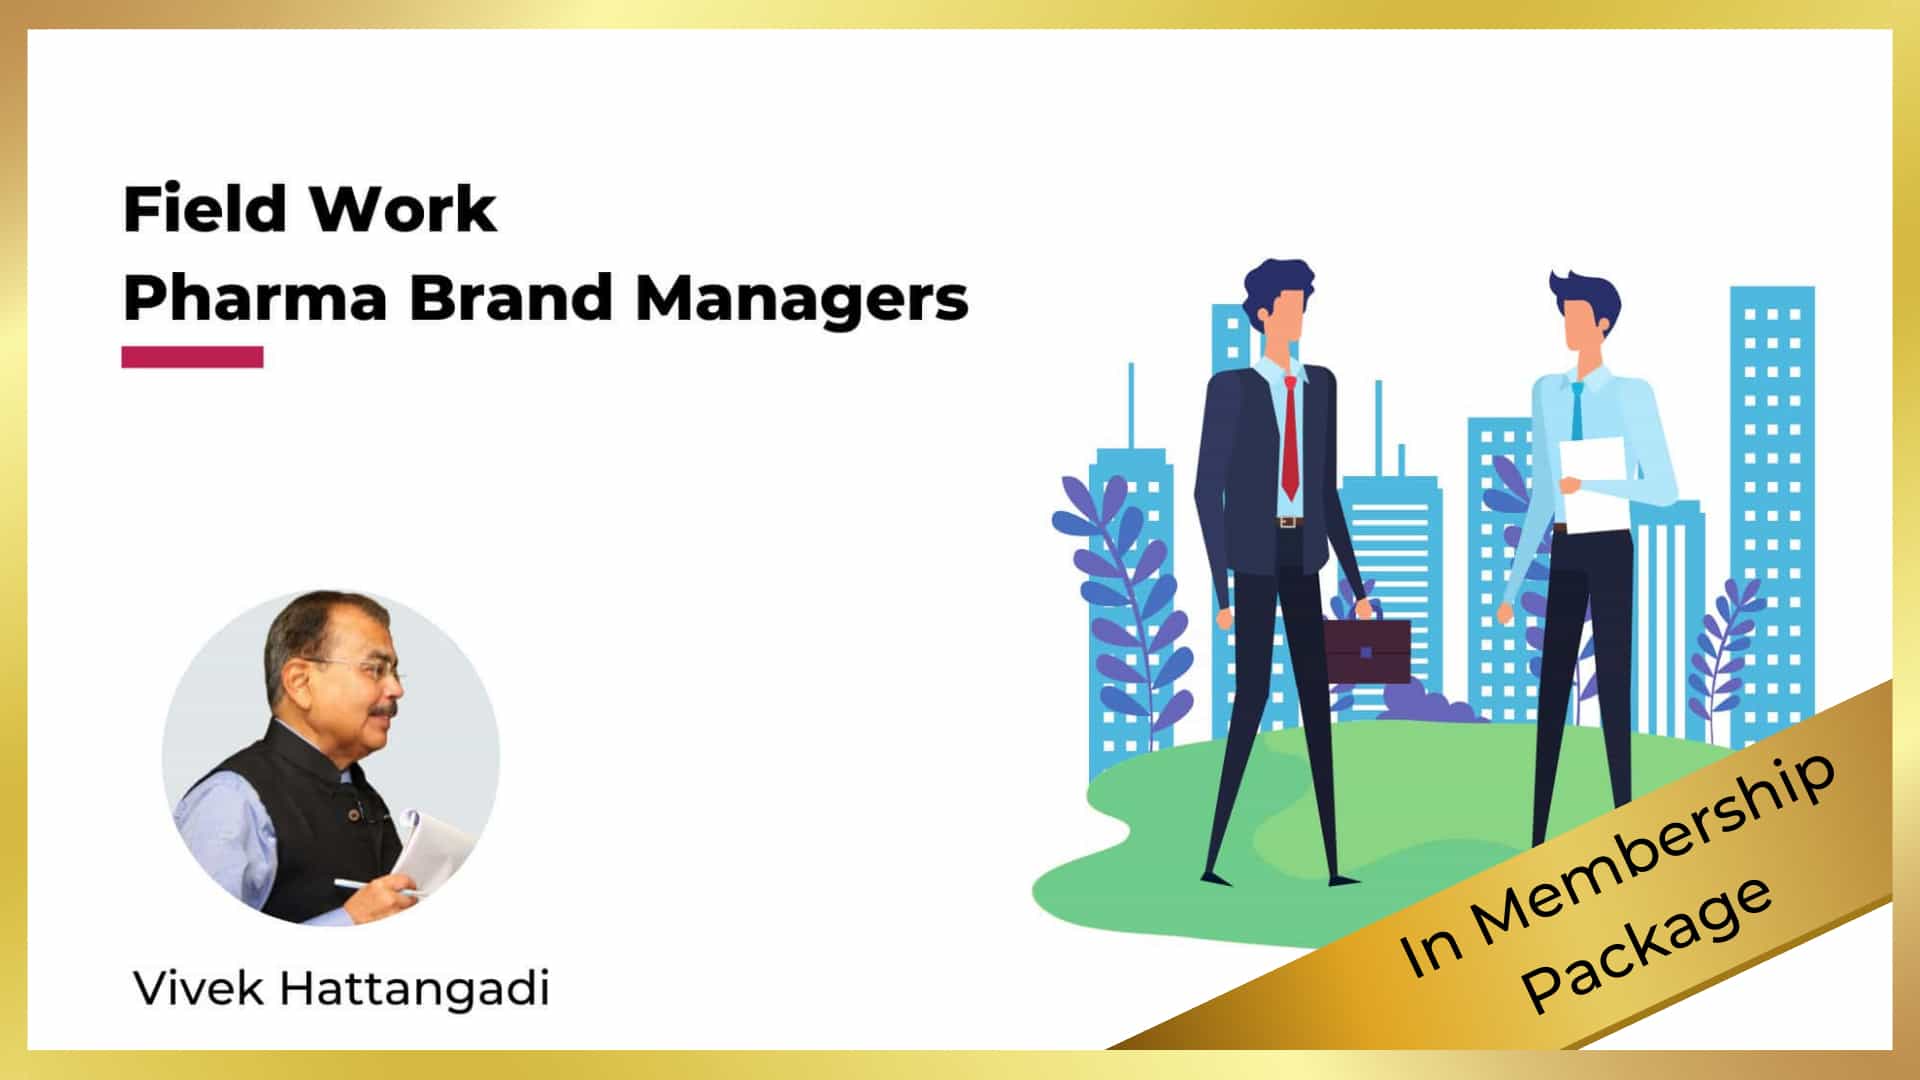 Pharma Brand Managers and Field Work by Vivek Hattangadi